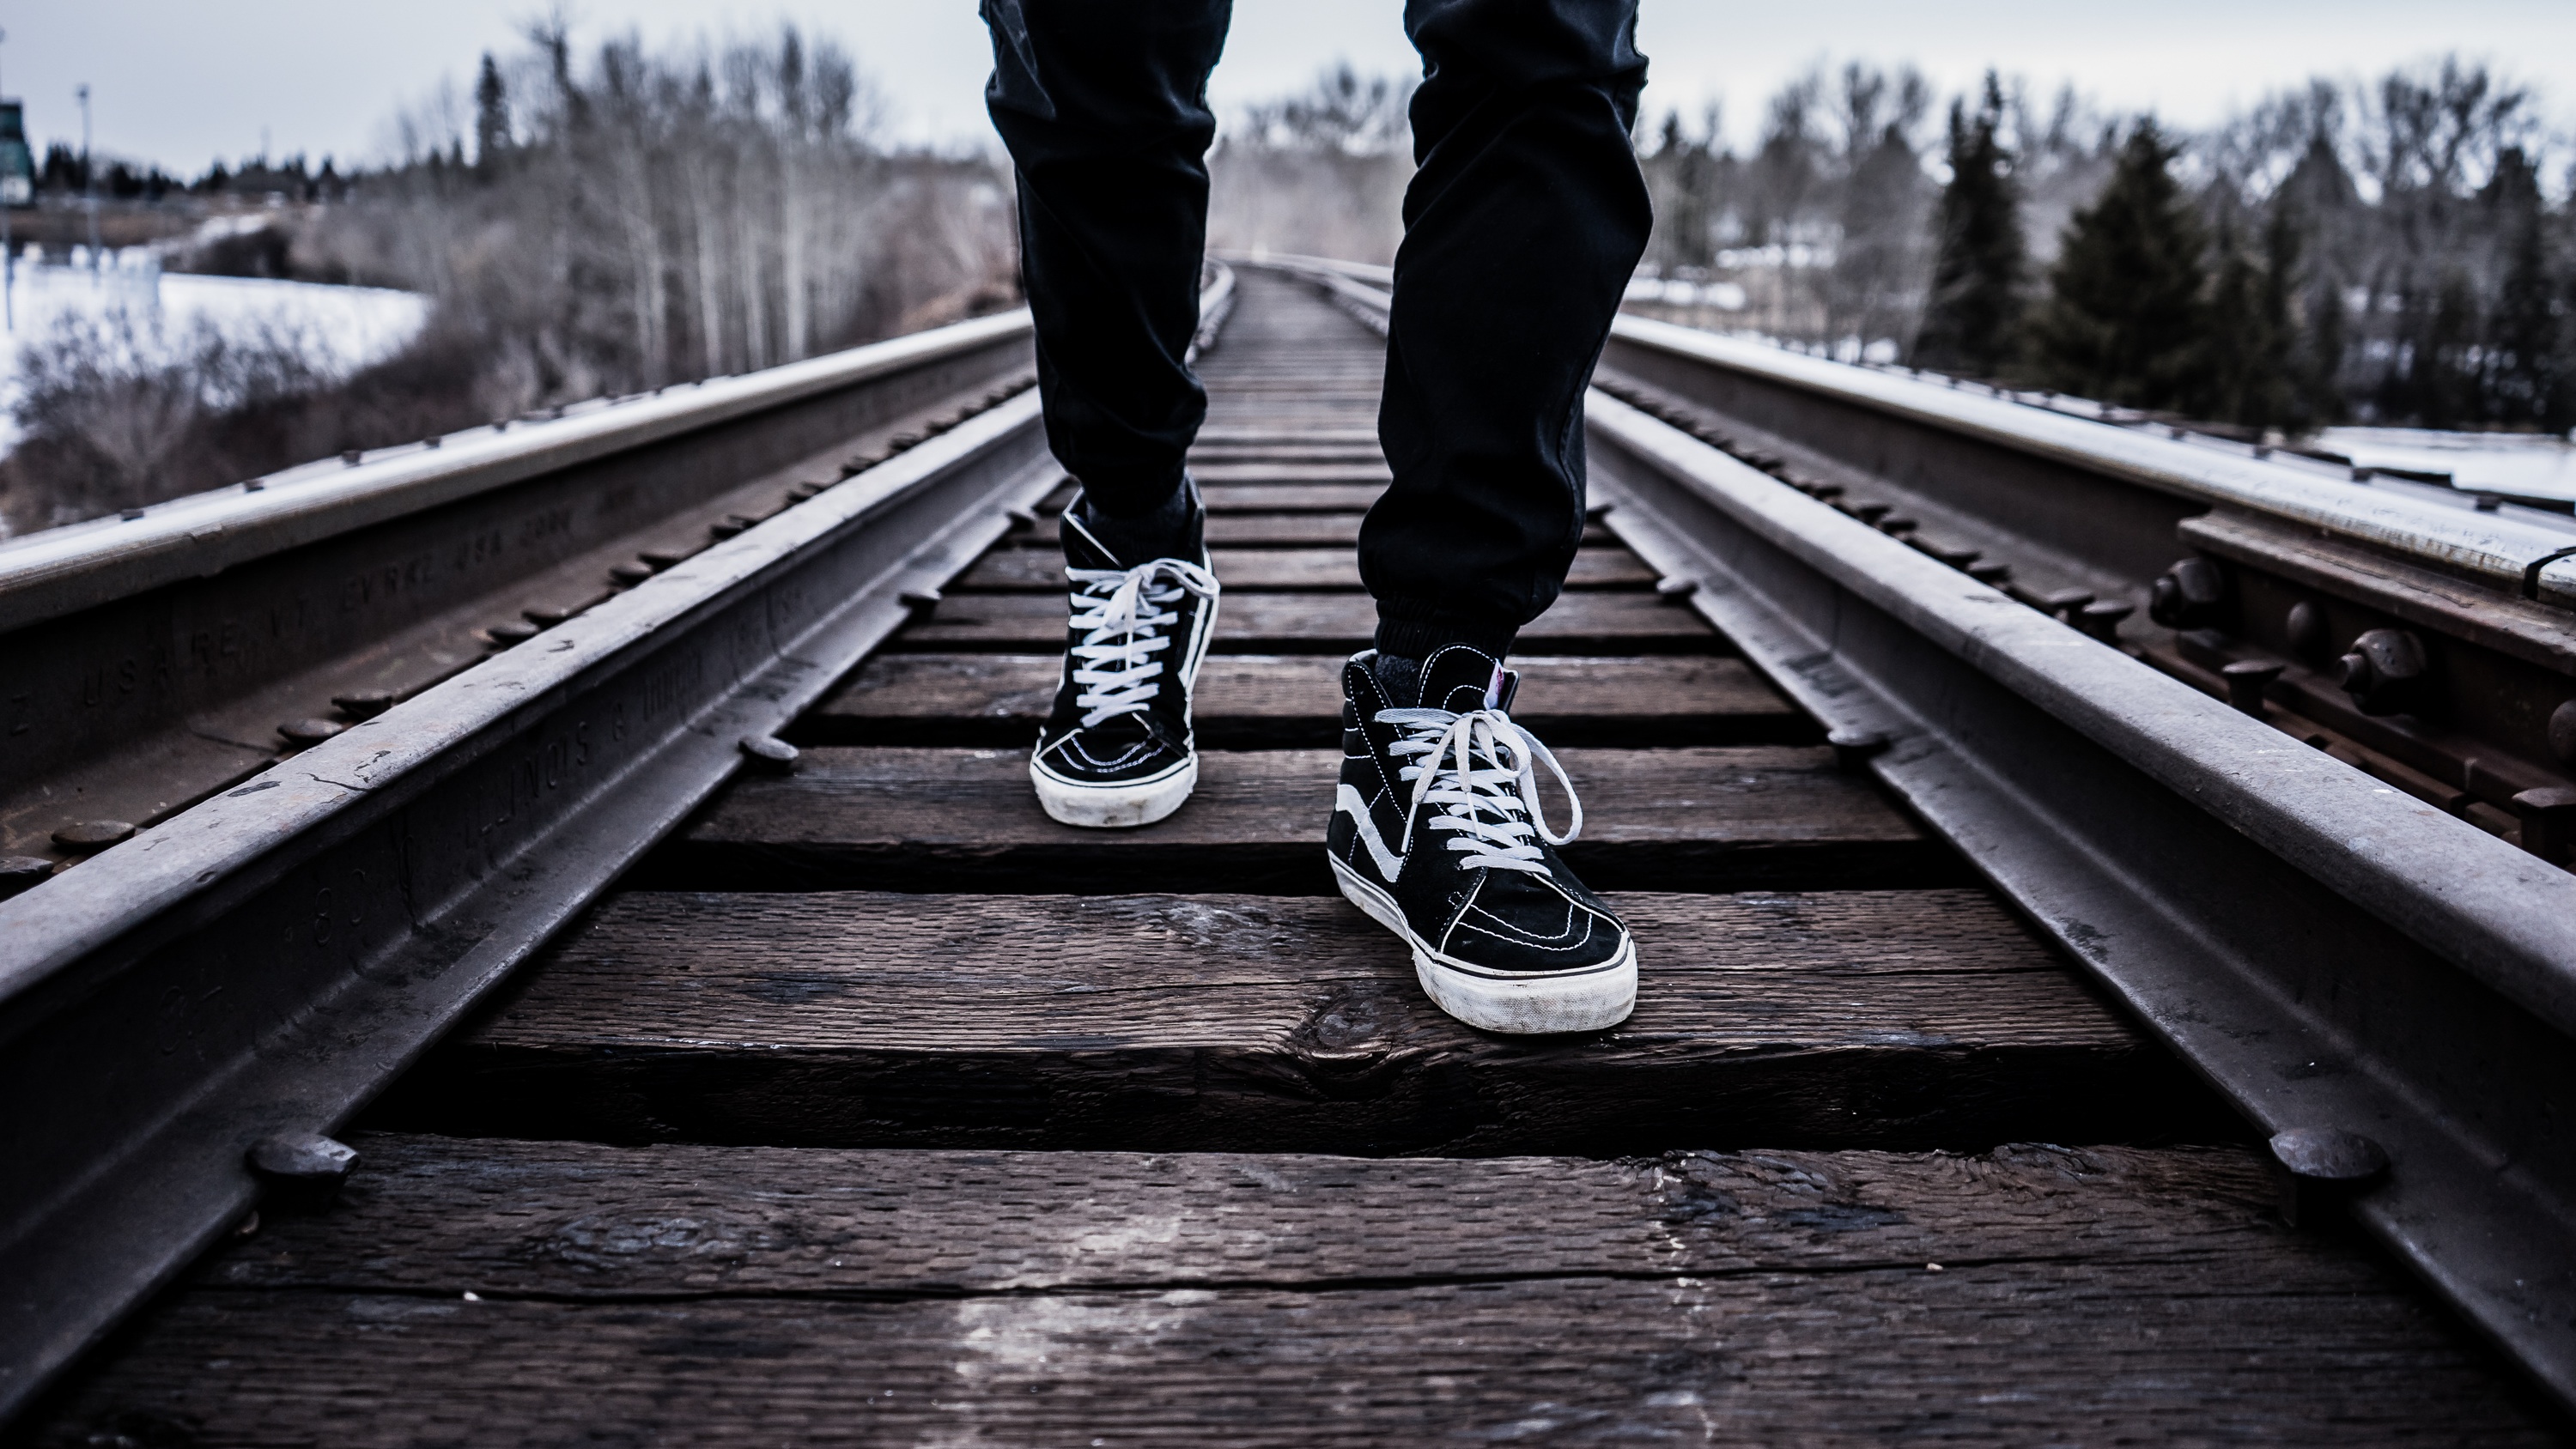 Walking on the rail photo